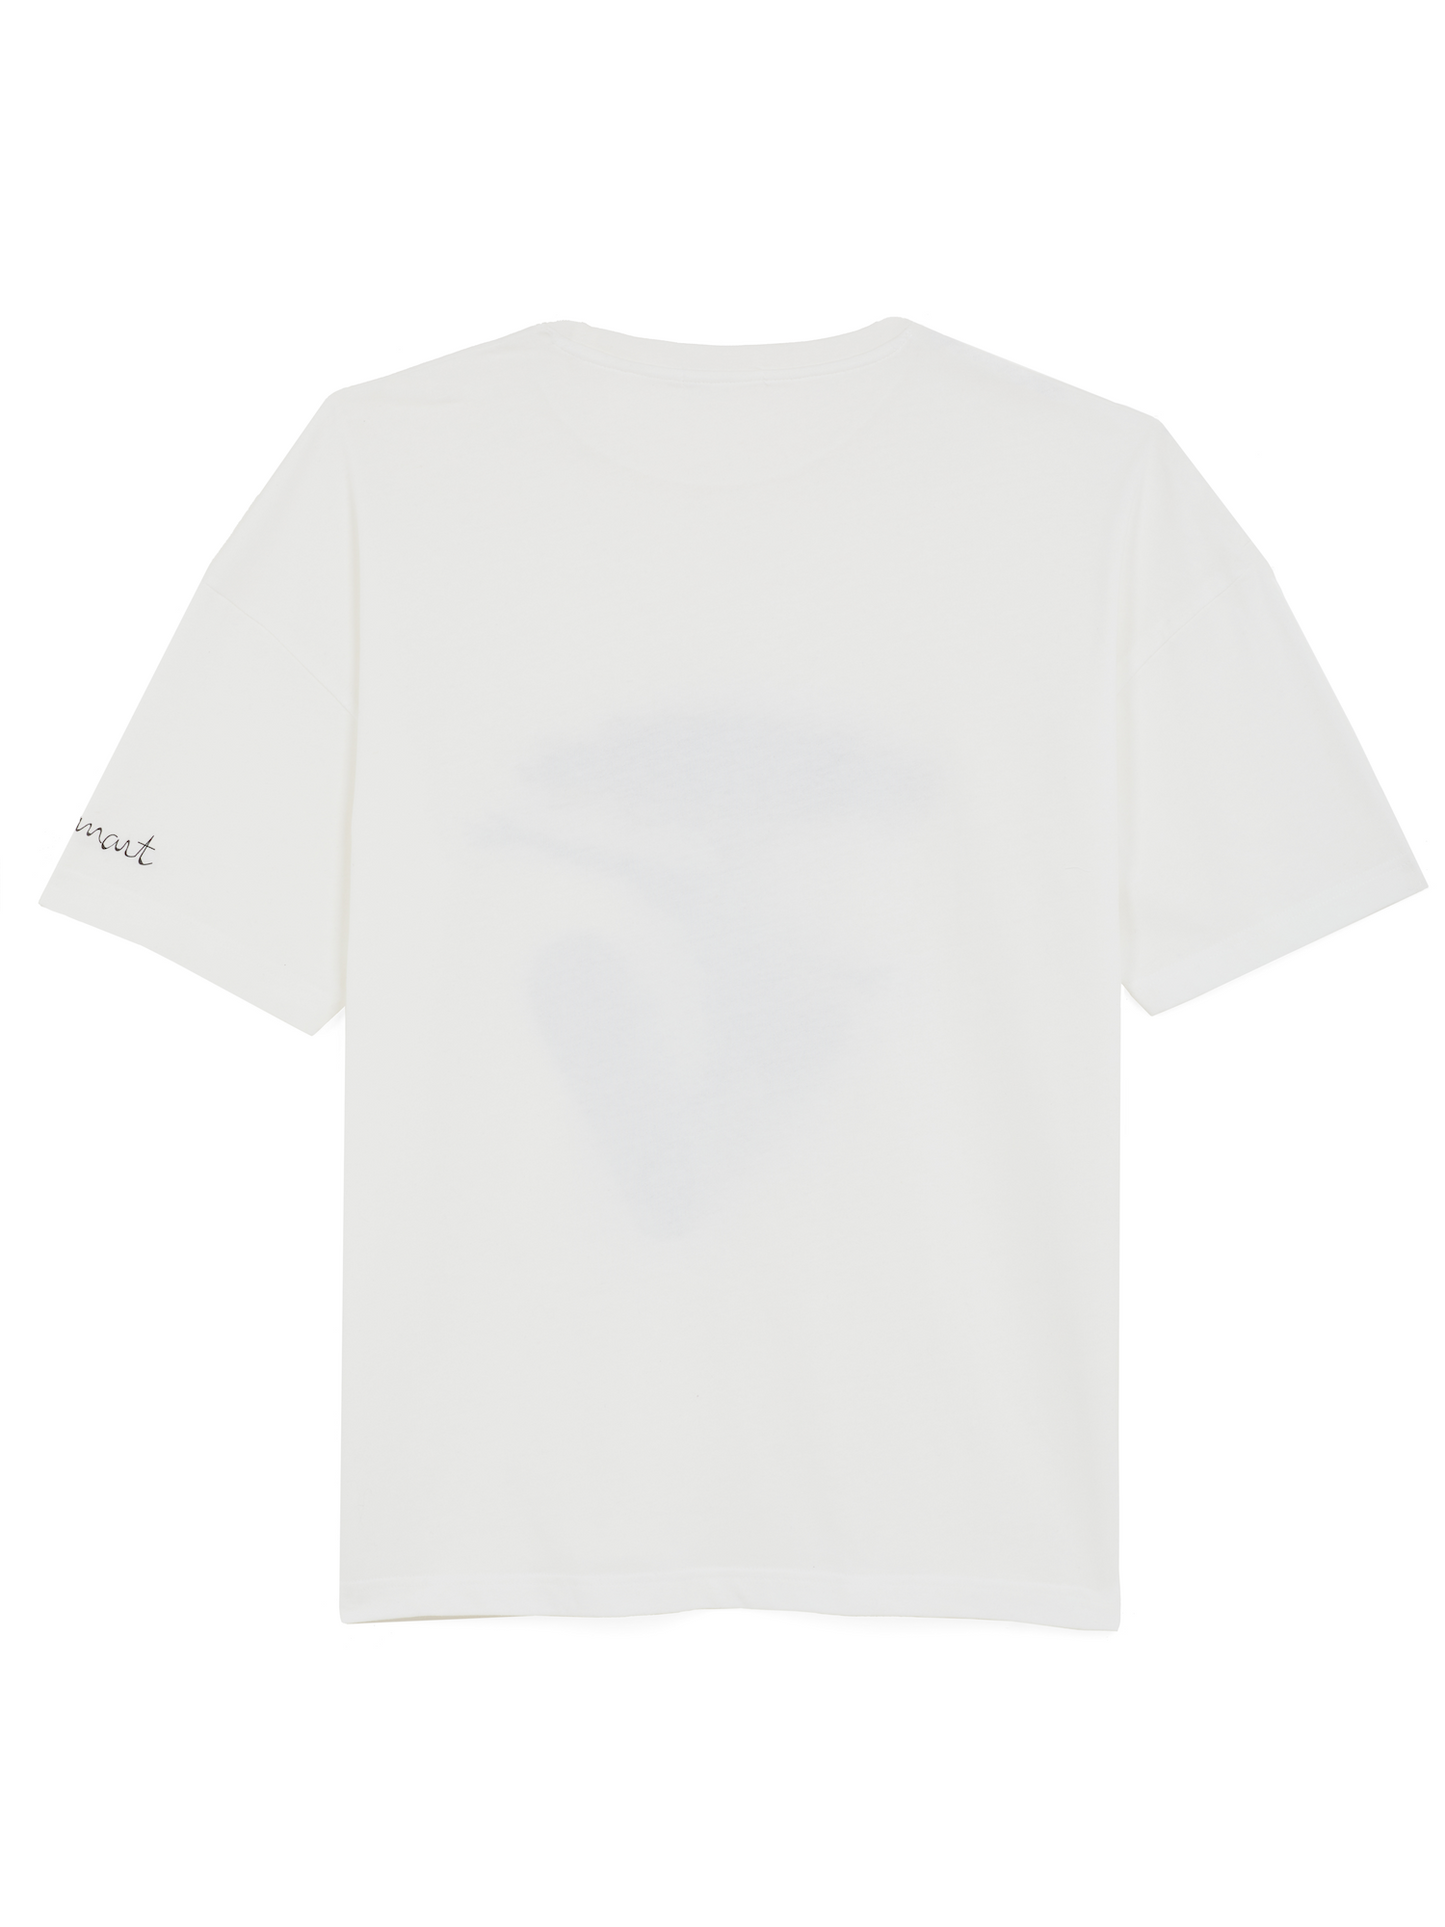 Xasuke T-shirt (Em_Mart Collab)